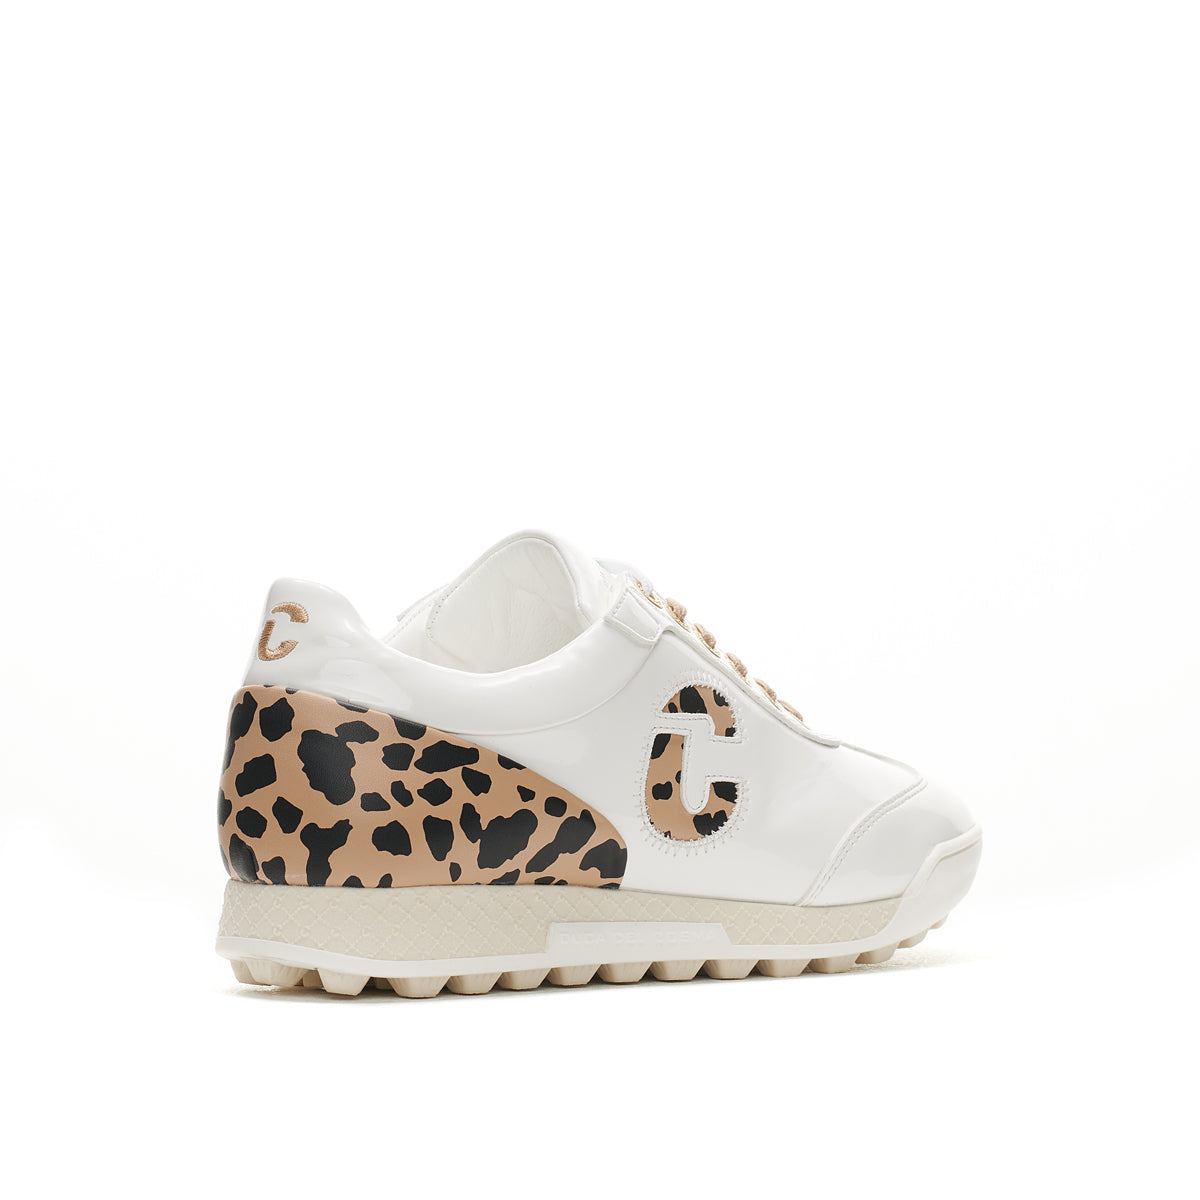 Women's King Cheetah White Golf Shoe